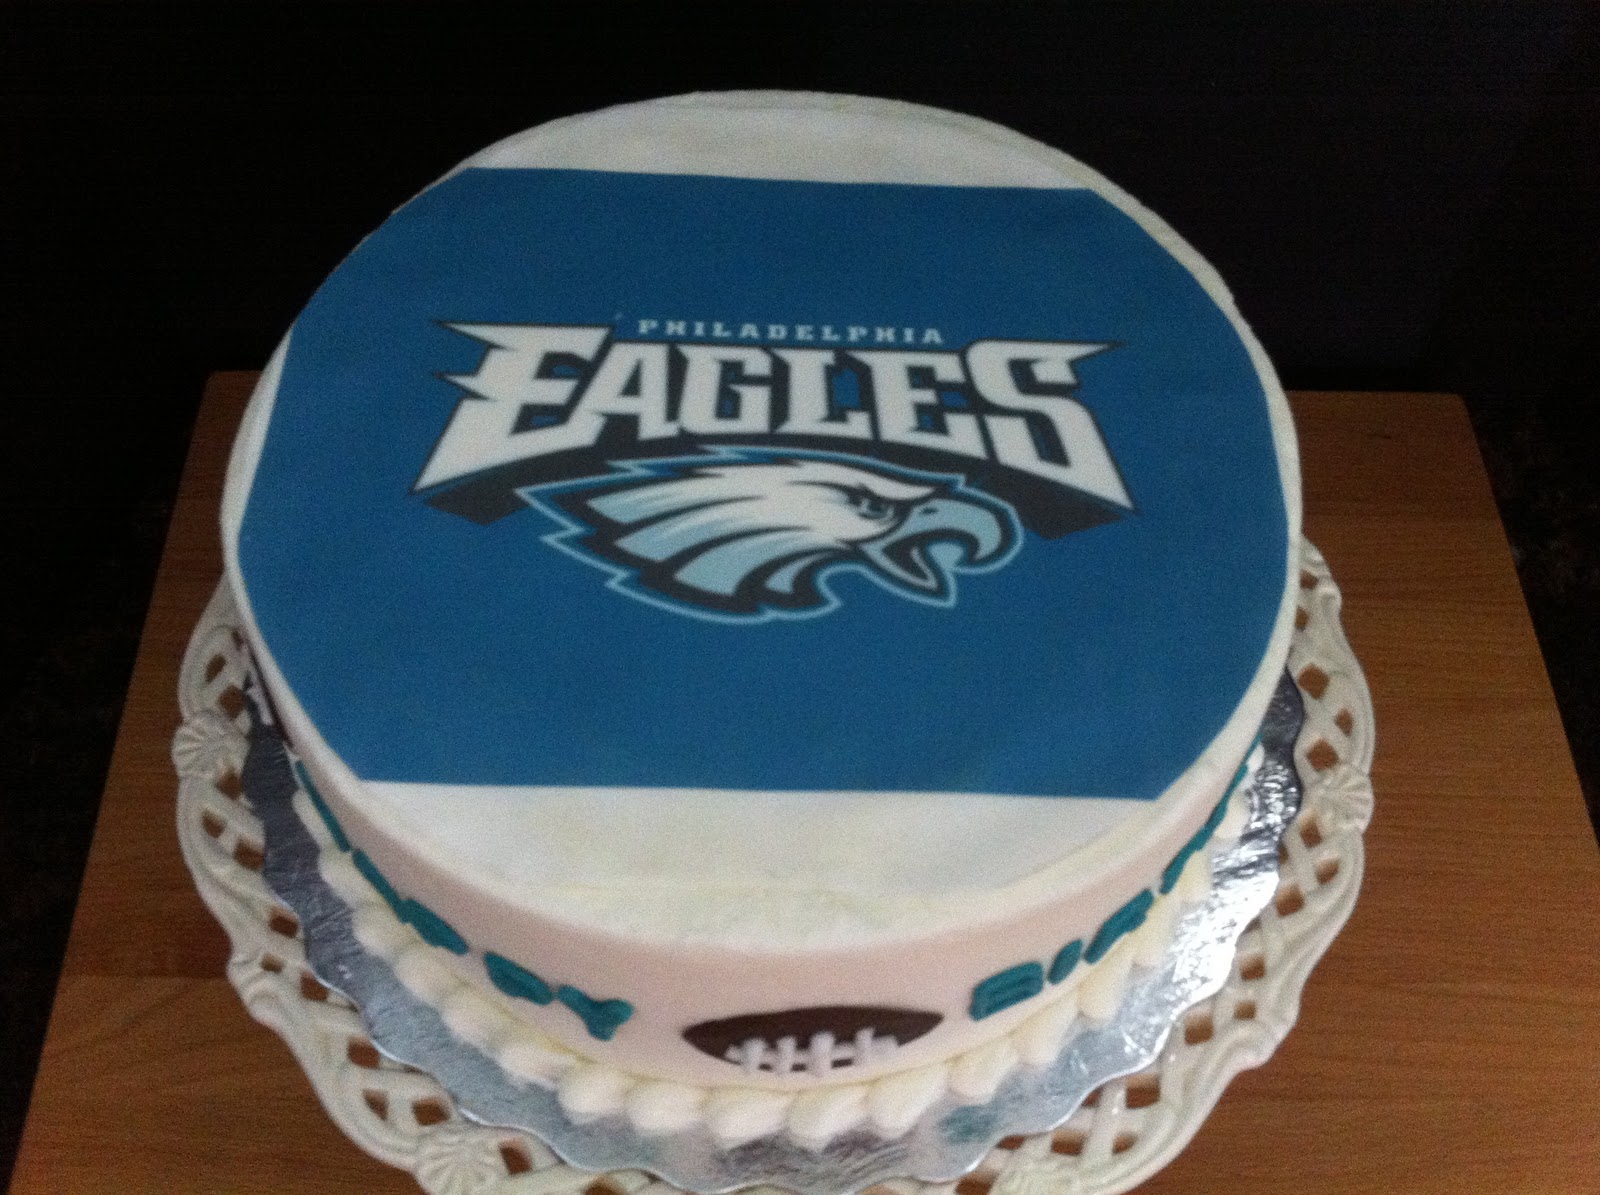 Philadelphia Eagles Birthday Cake.